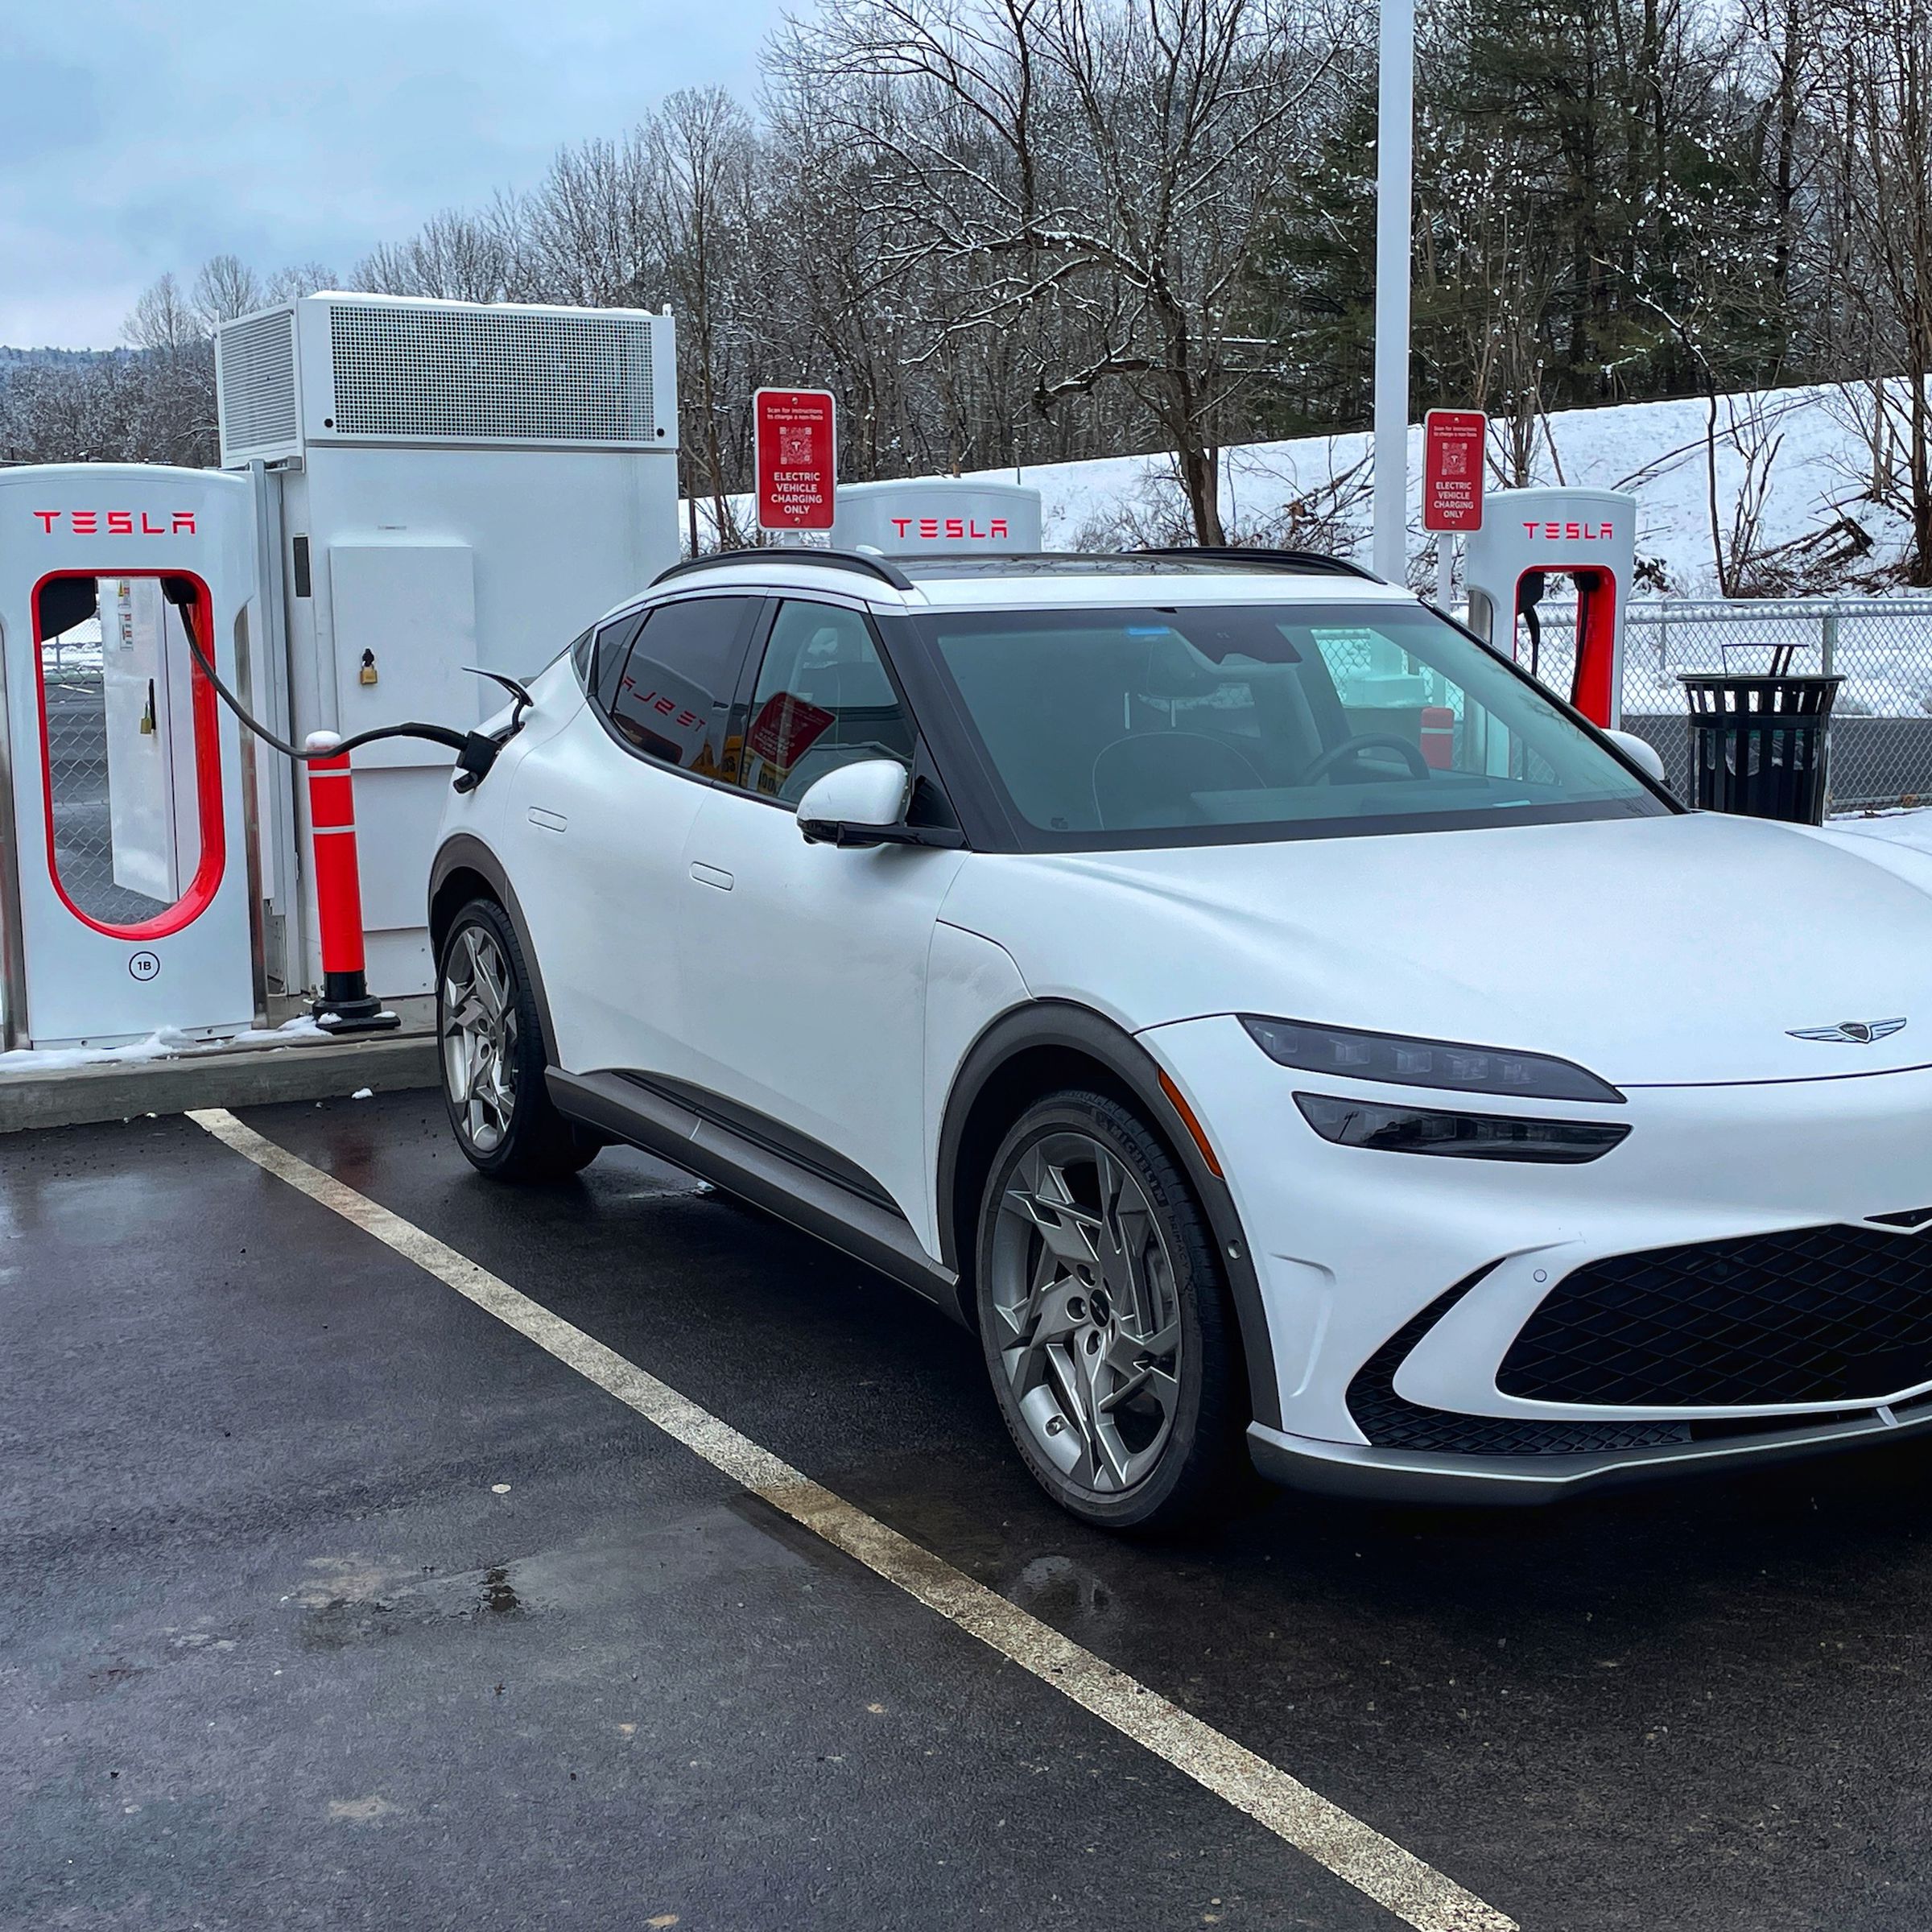 Genesis GV60 charging at a Tesla Supercharger